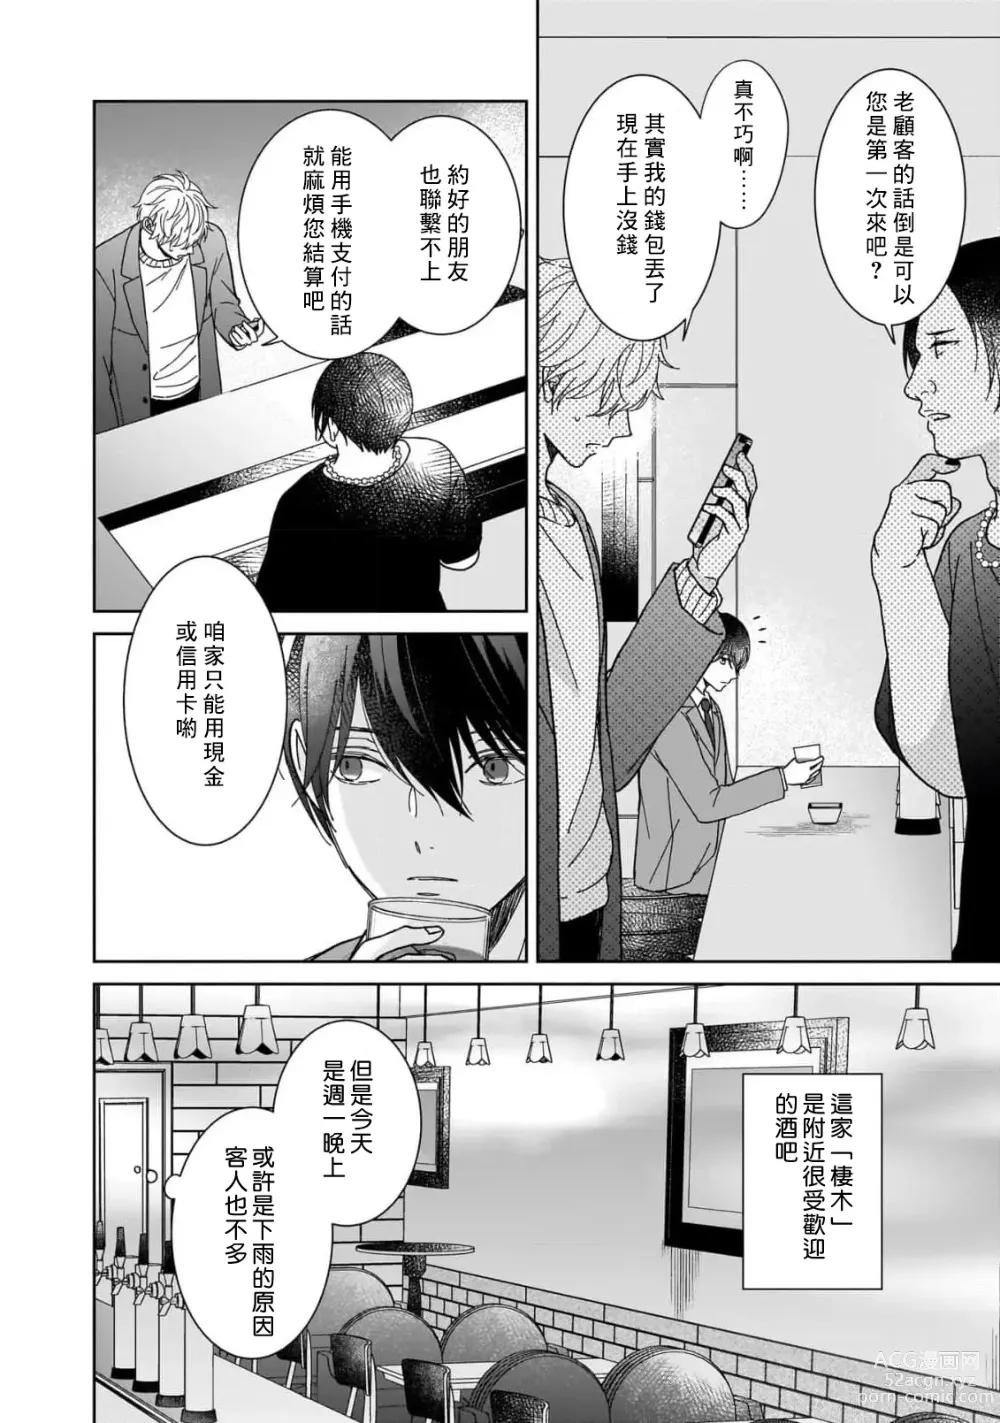 Page 4 of manga 下雨天有些许忧郁 1